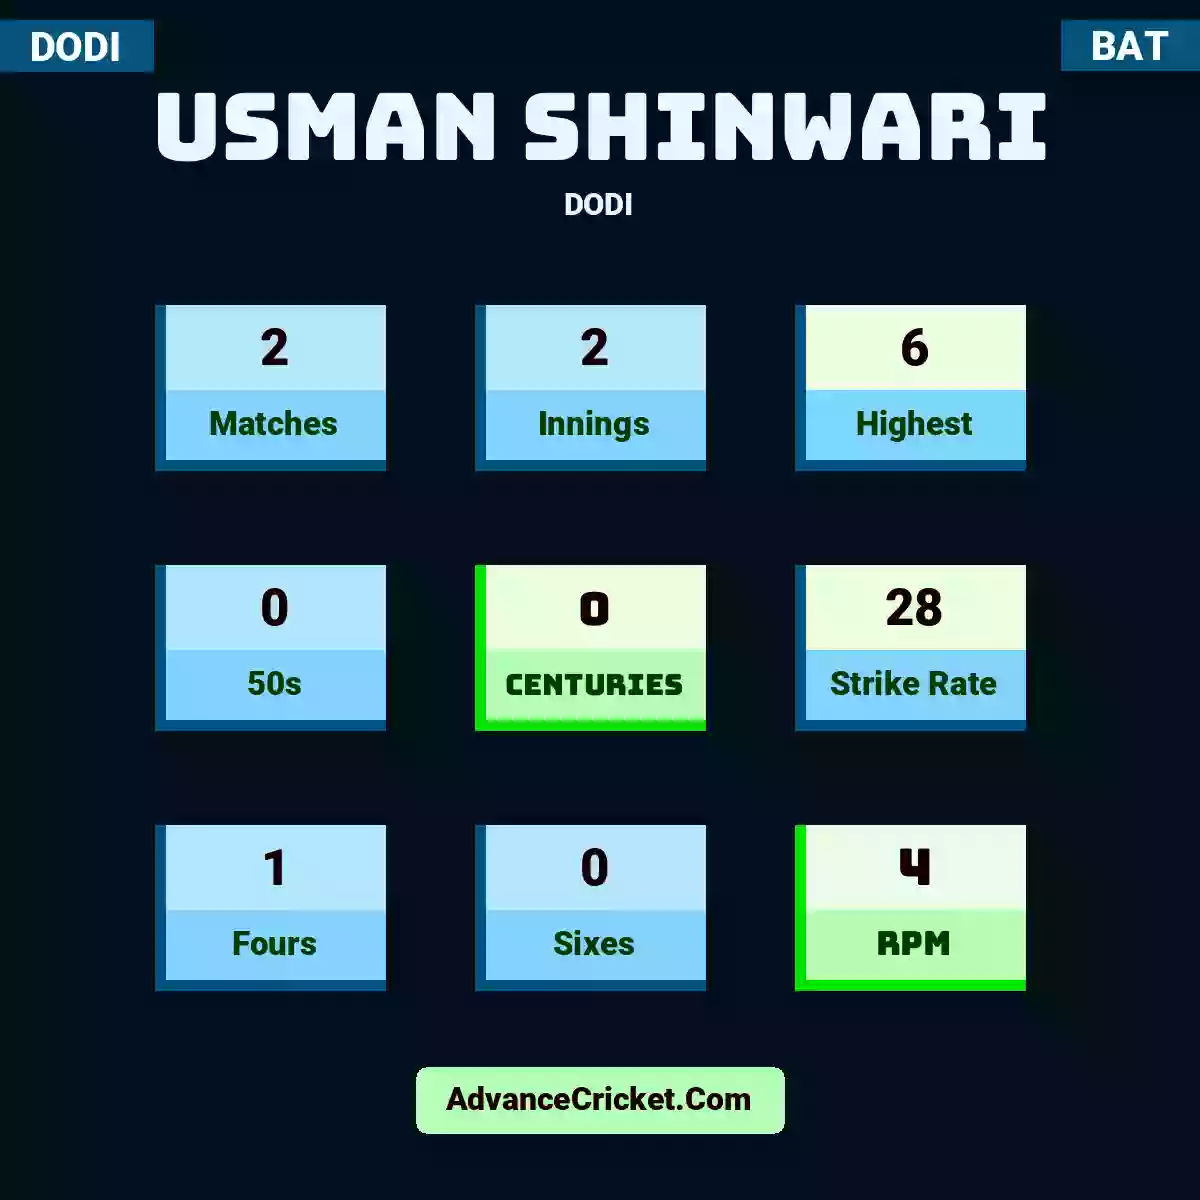 Usman Shinwari DODI , Usman Shinwari played 2 matches, scored 6 runs as highest, 0 half-centuries, and 0 centuries, with a strike rate of 28. U.Shinwari hit 1 fours and 0 sixes, with an RPM of 4.